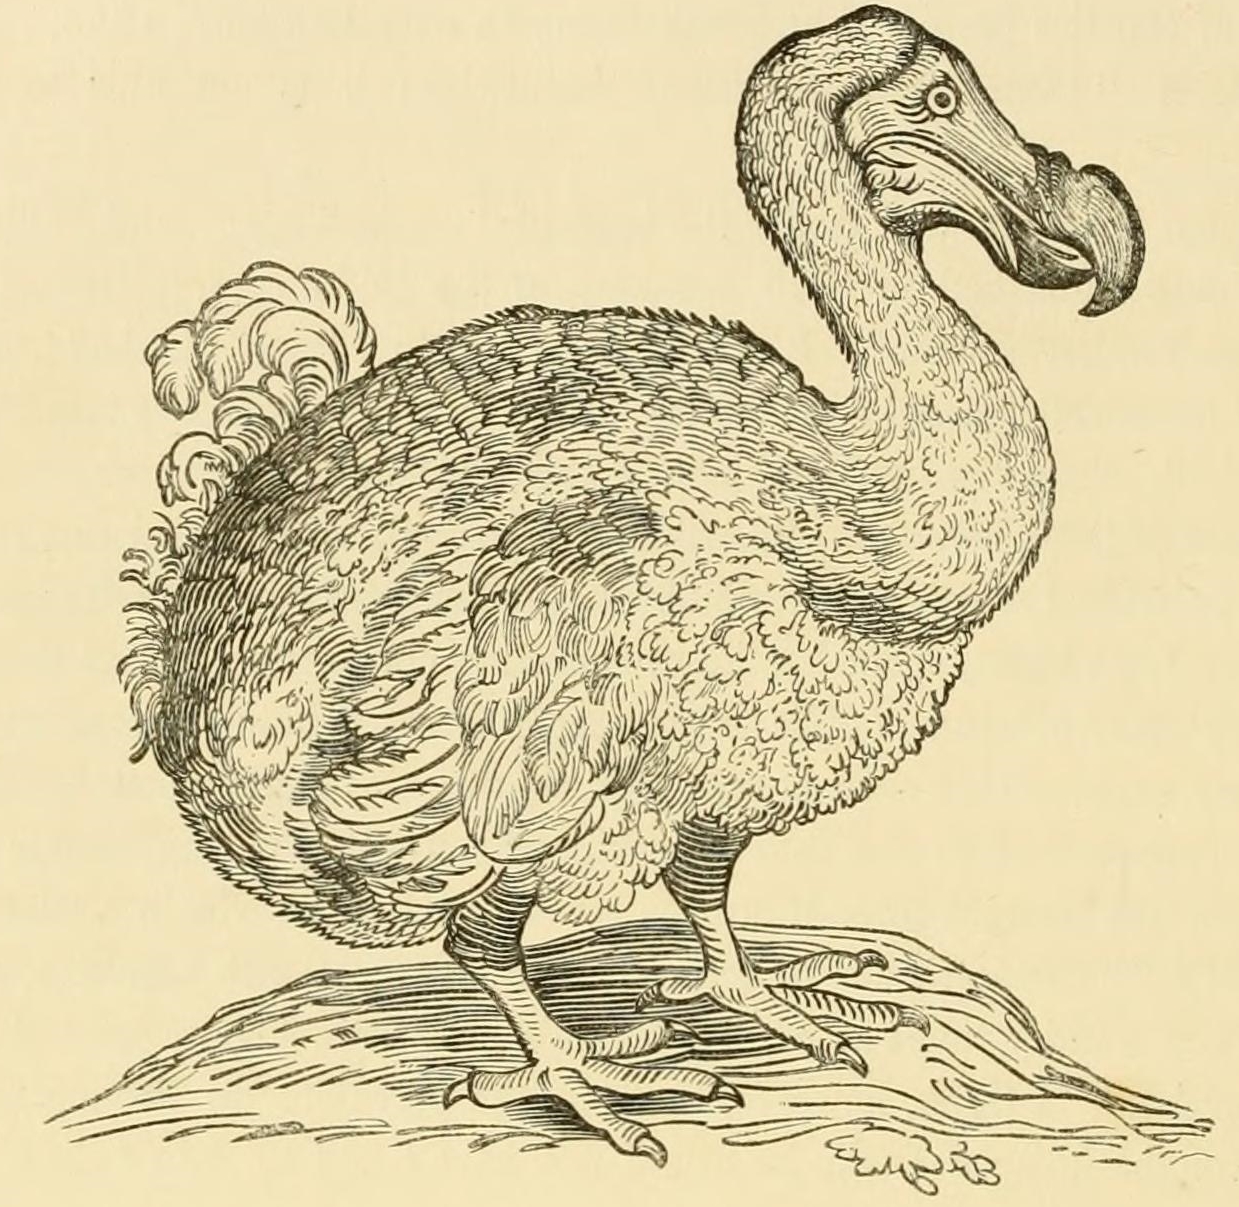 Misunderstood dodo gets its due – The History Blog